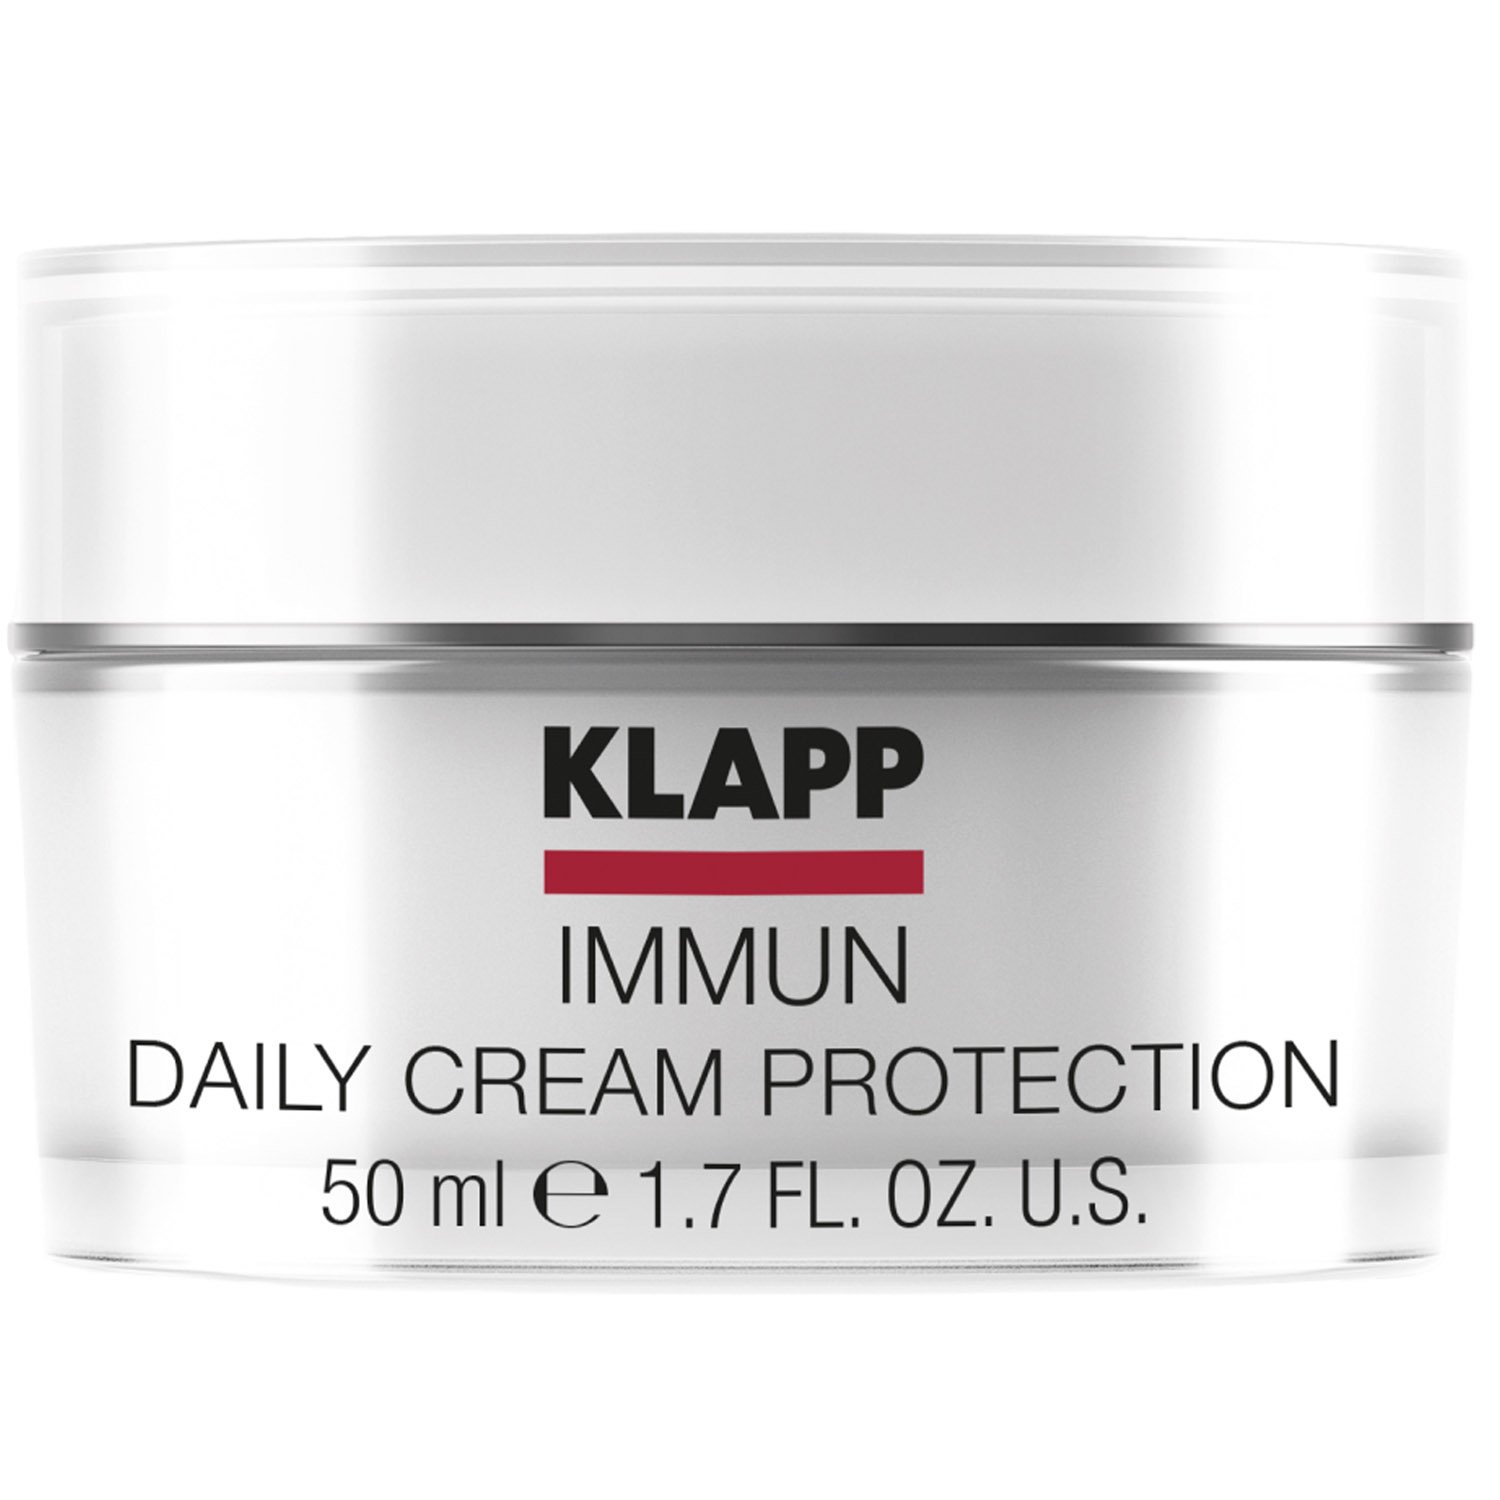 Крем для обличчя Klapp Immun Daily Cream Protection, денний, 50 мл - фото 1